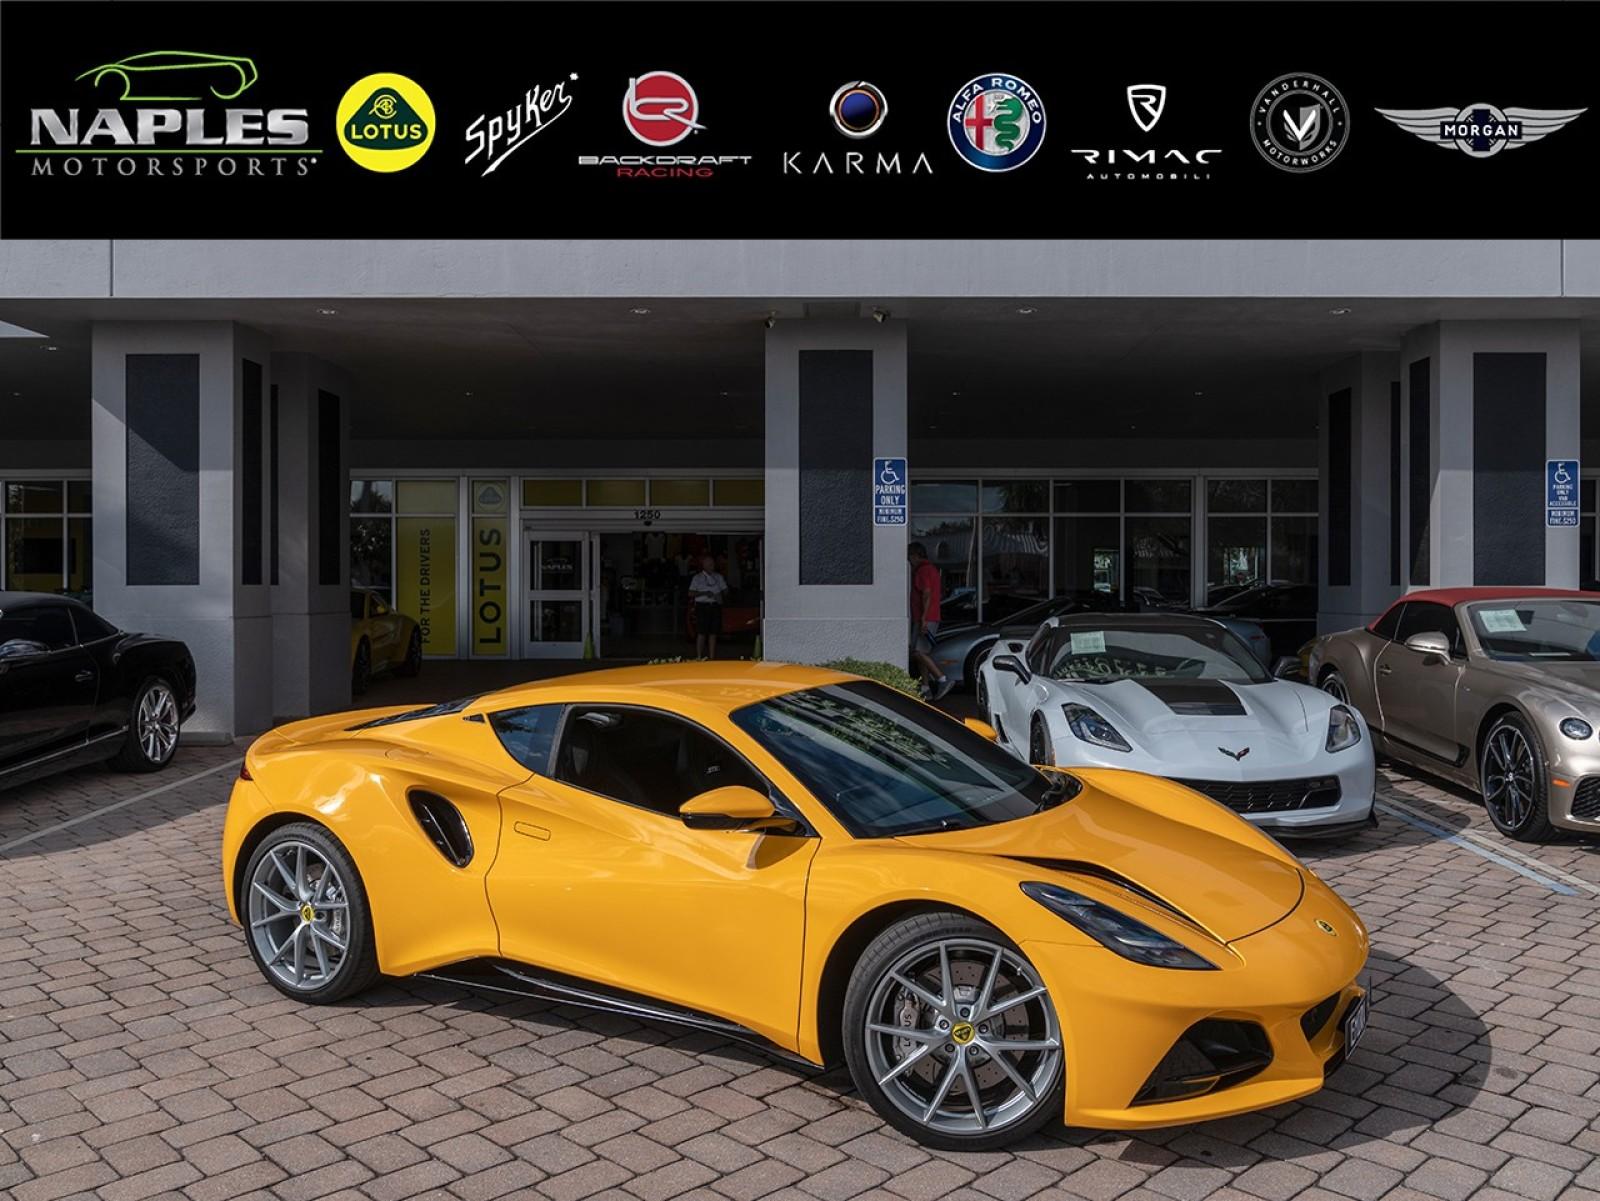 New 2023 Lotus Emira 6 Spd V6 For Sale (93,995) Naples Motorsports